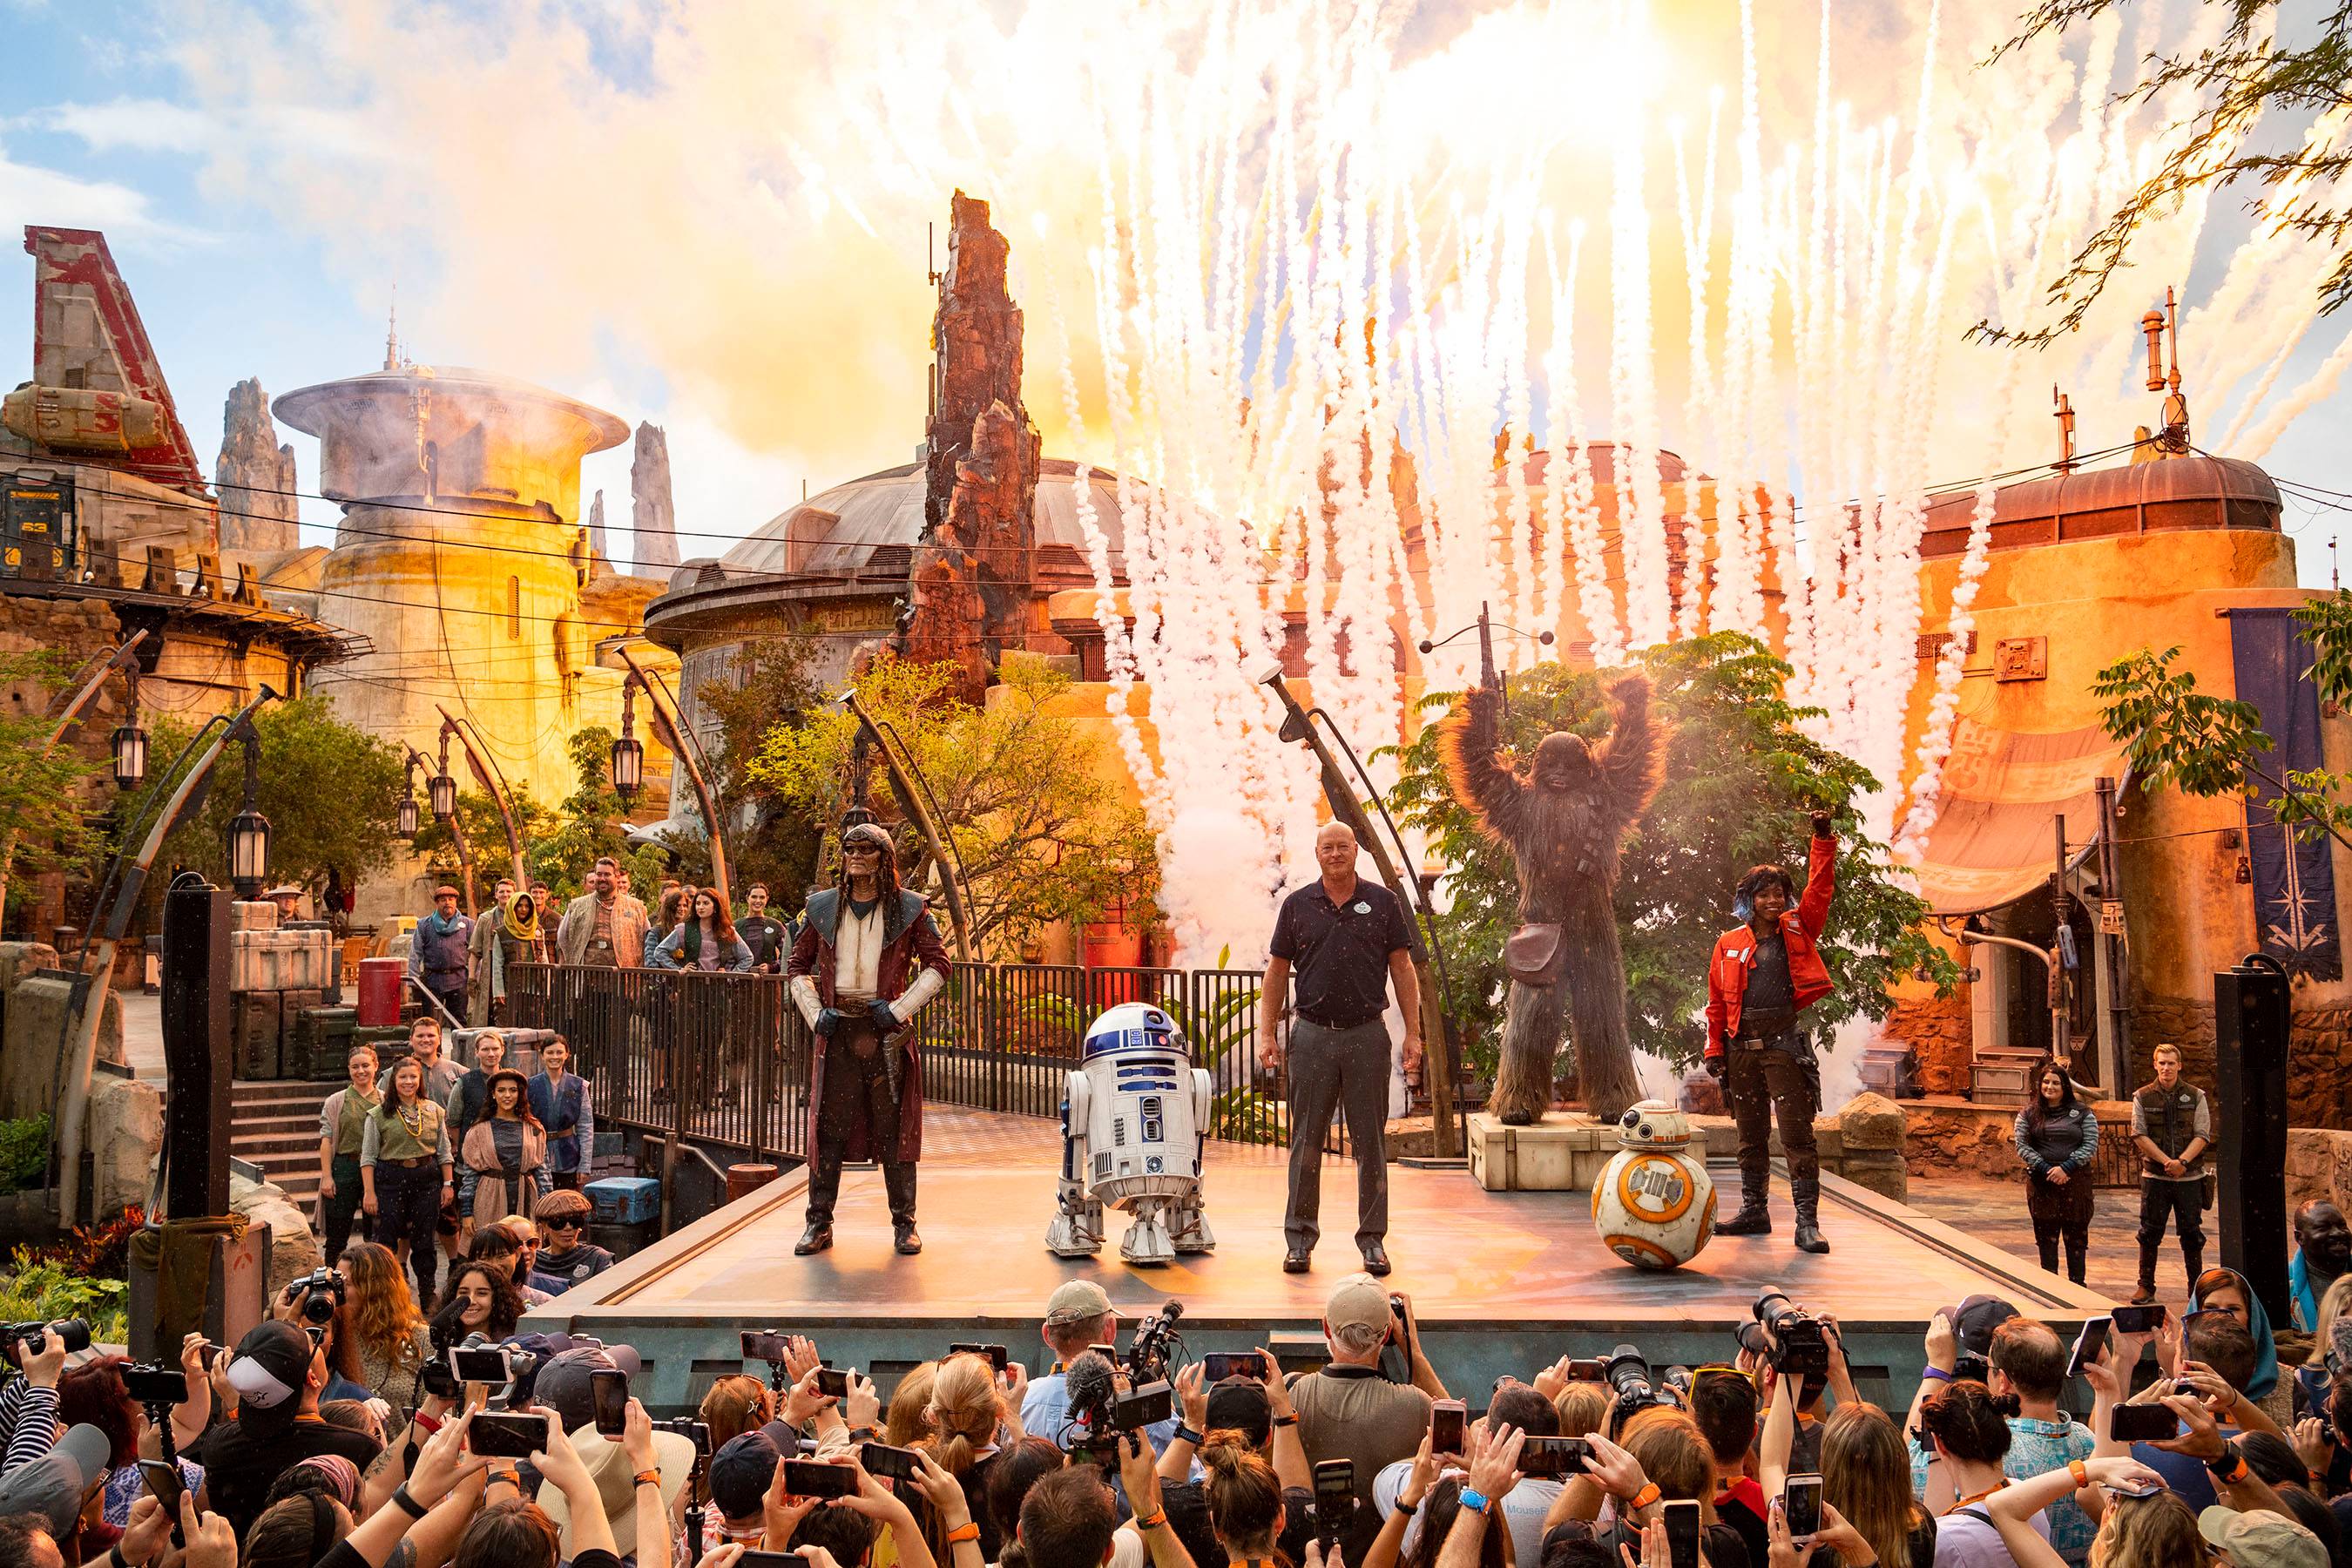 Disneyland and Disney's Hollywood Studios opened their Star Wars lands in 2019